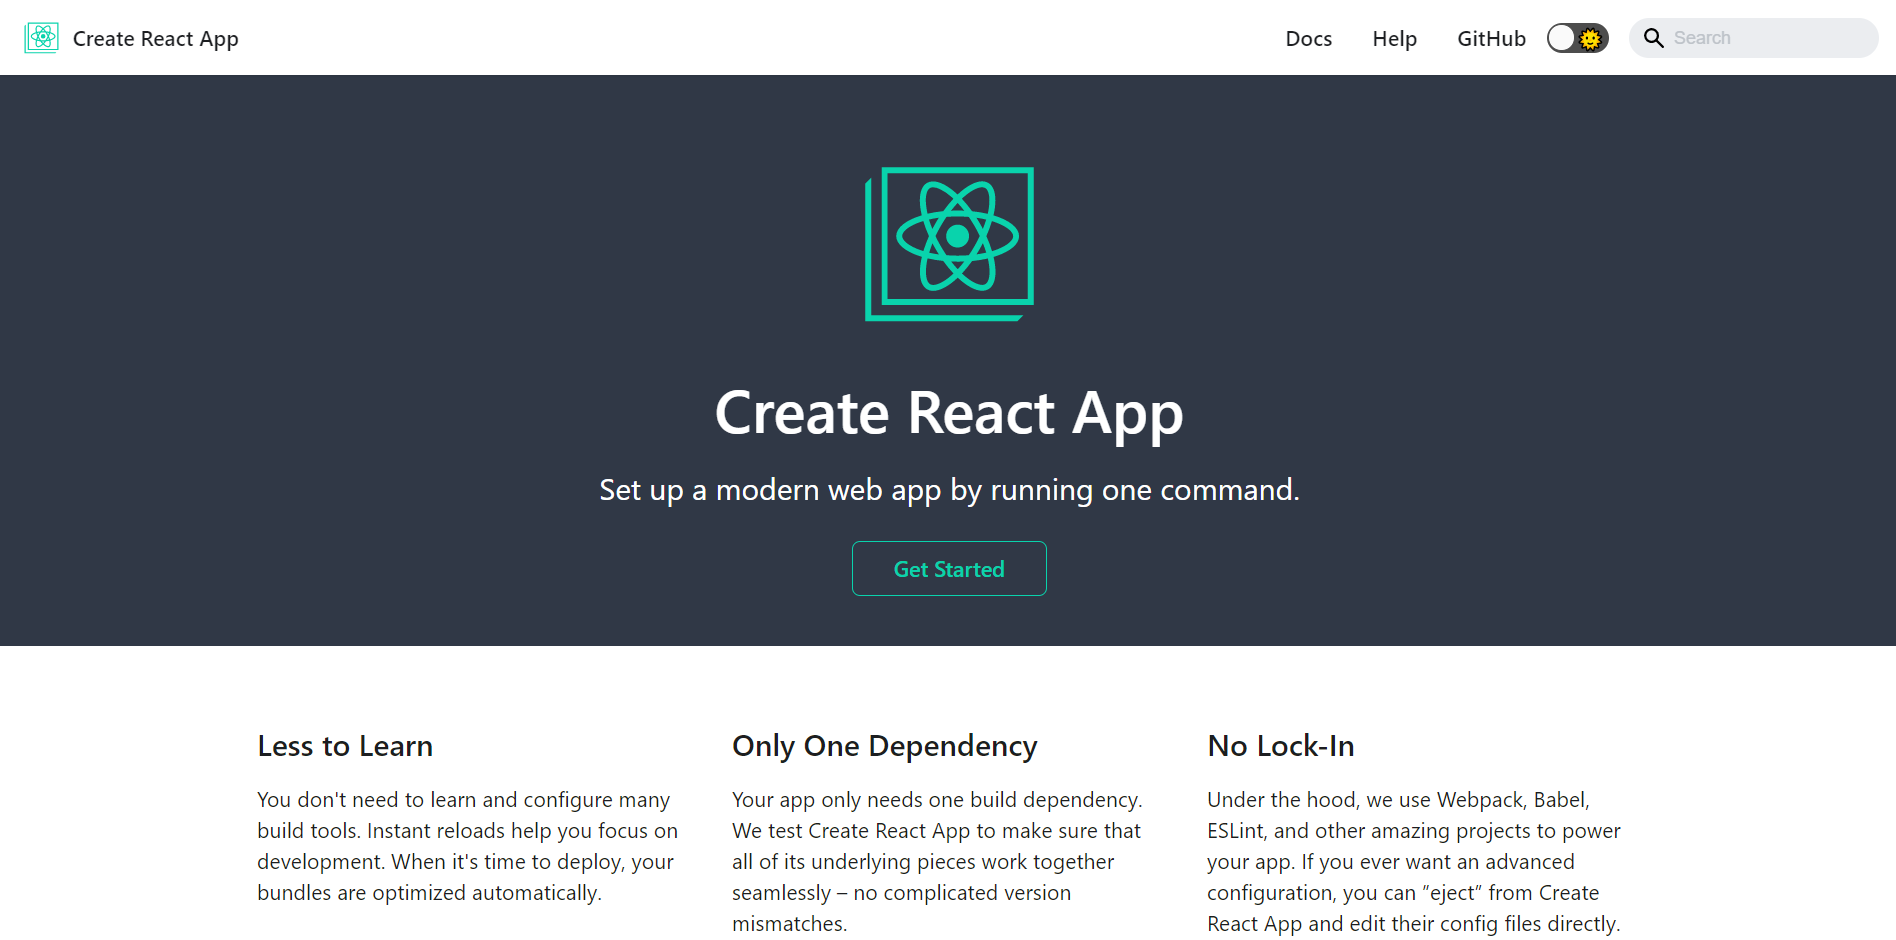 Create React App landing page